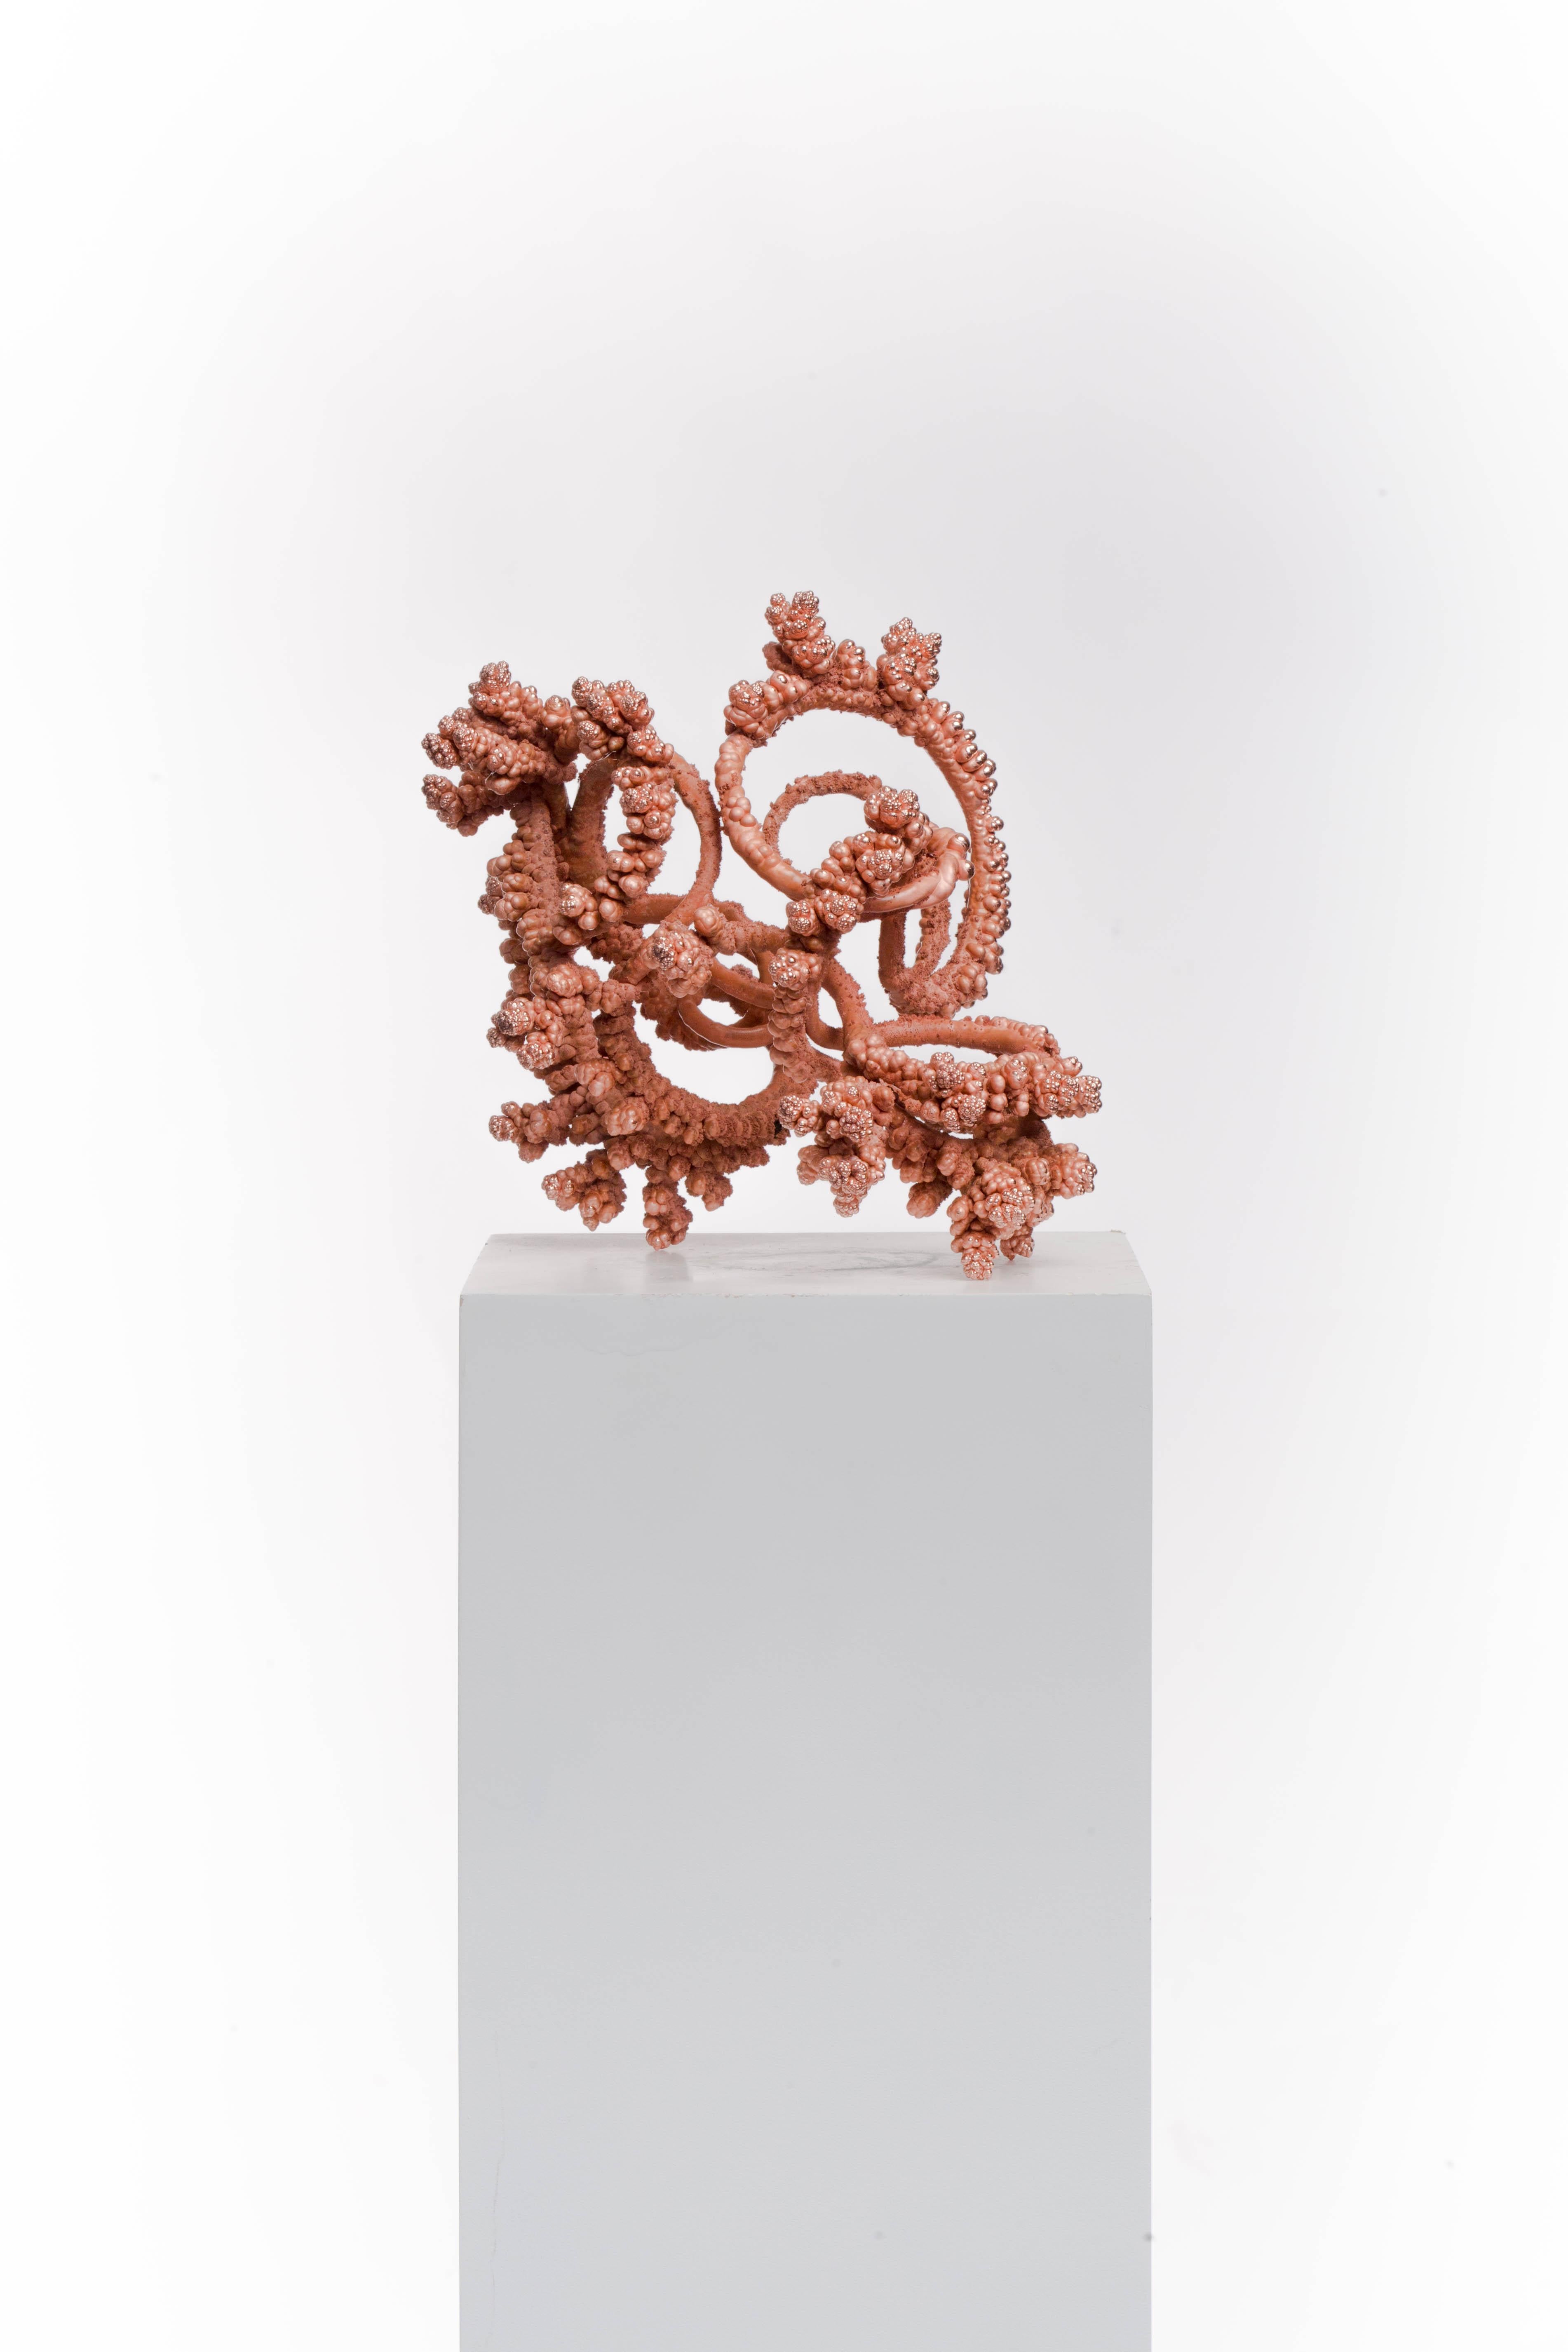 a 9.5 kg outdoor copper sculpture